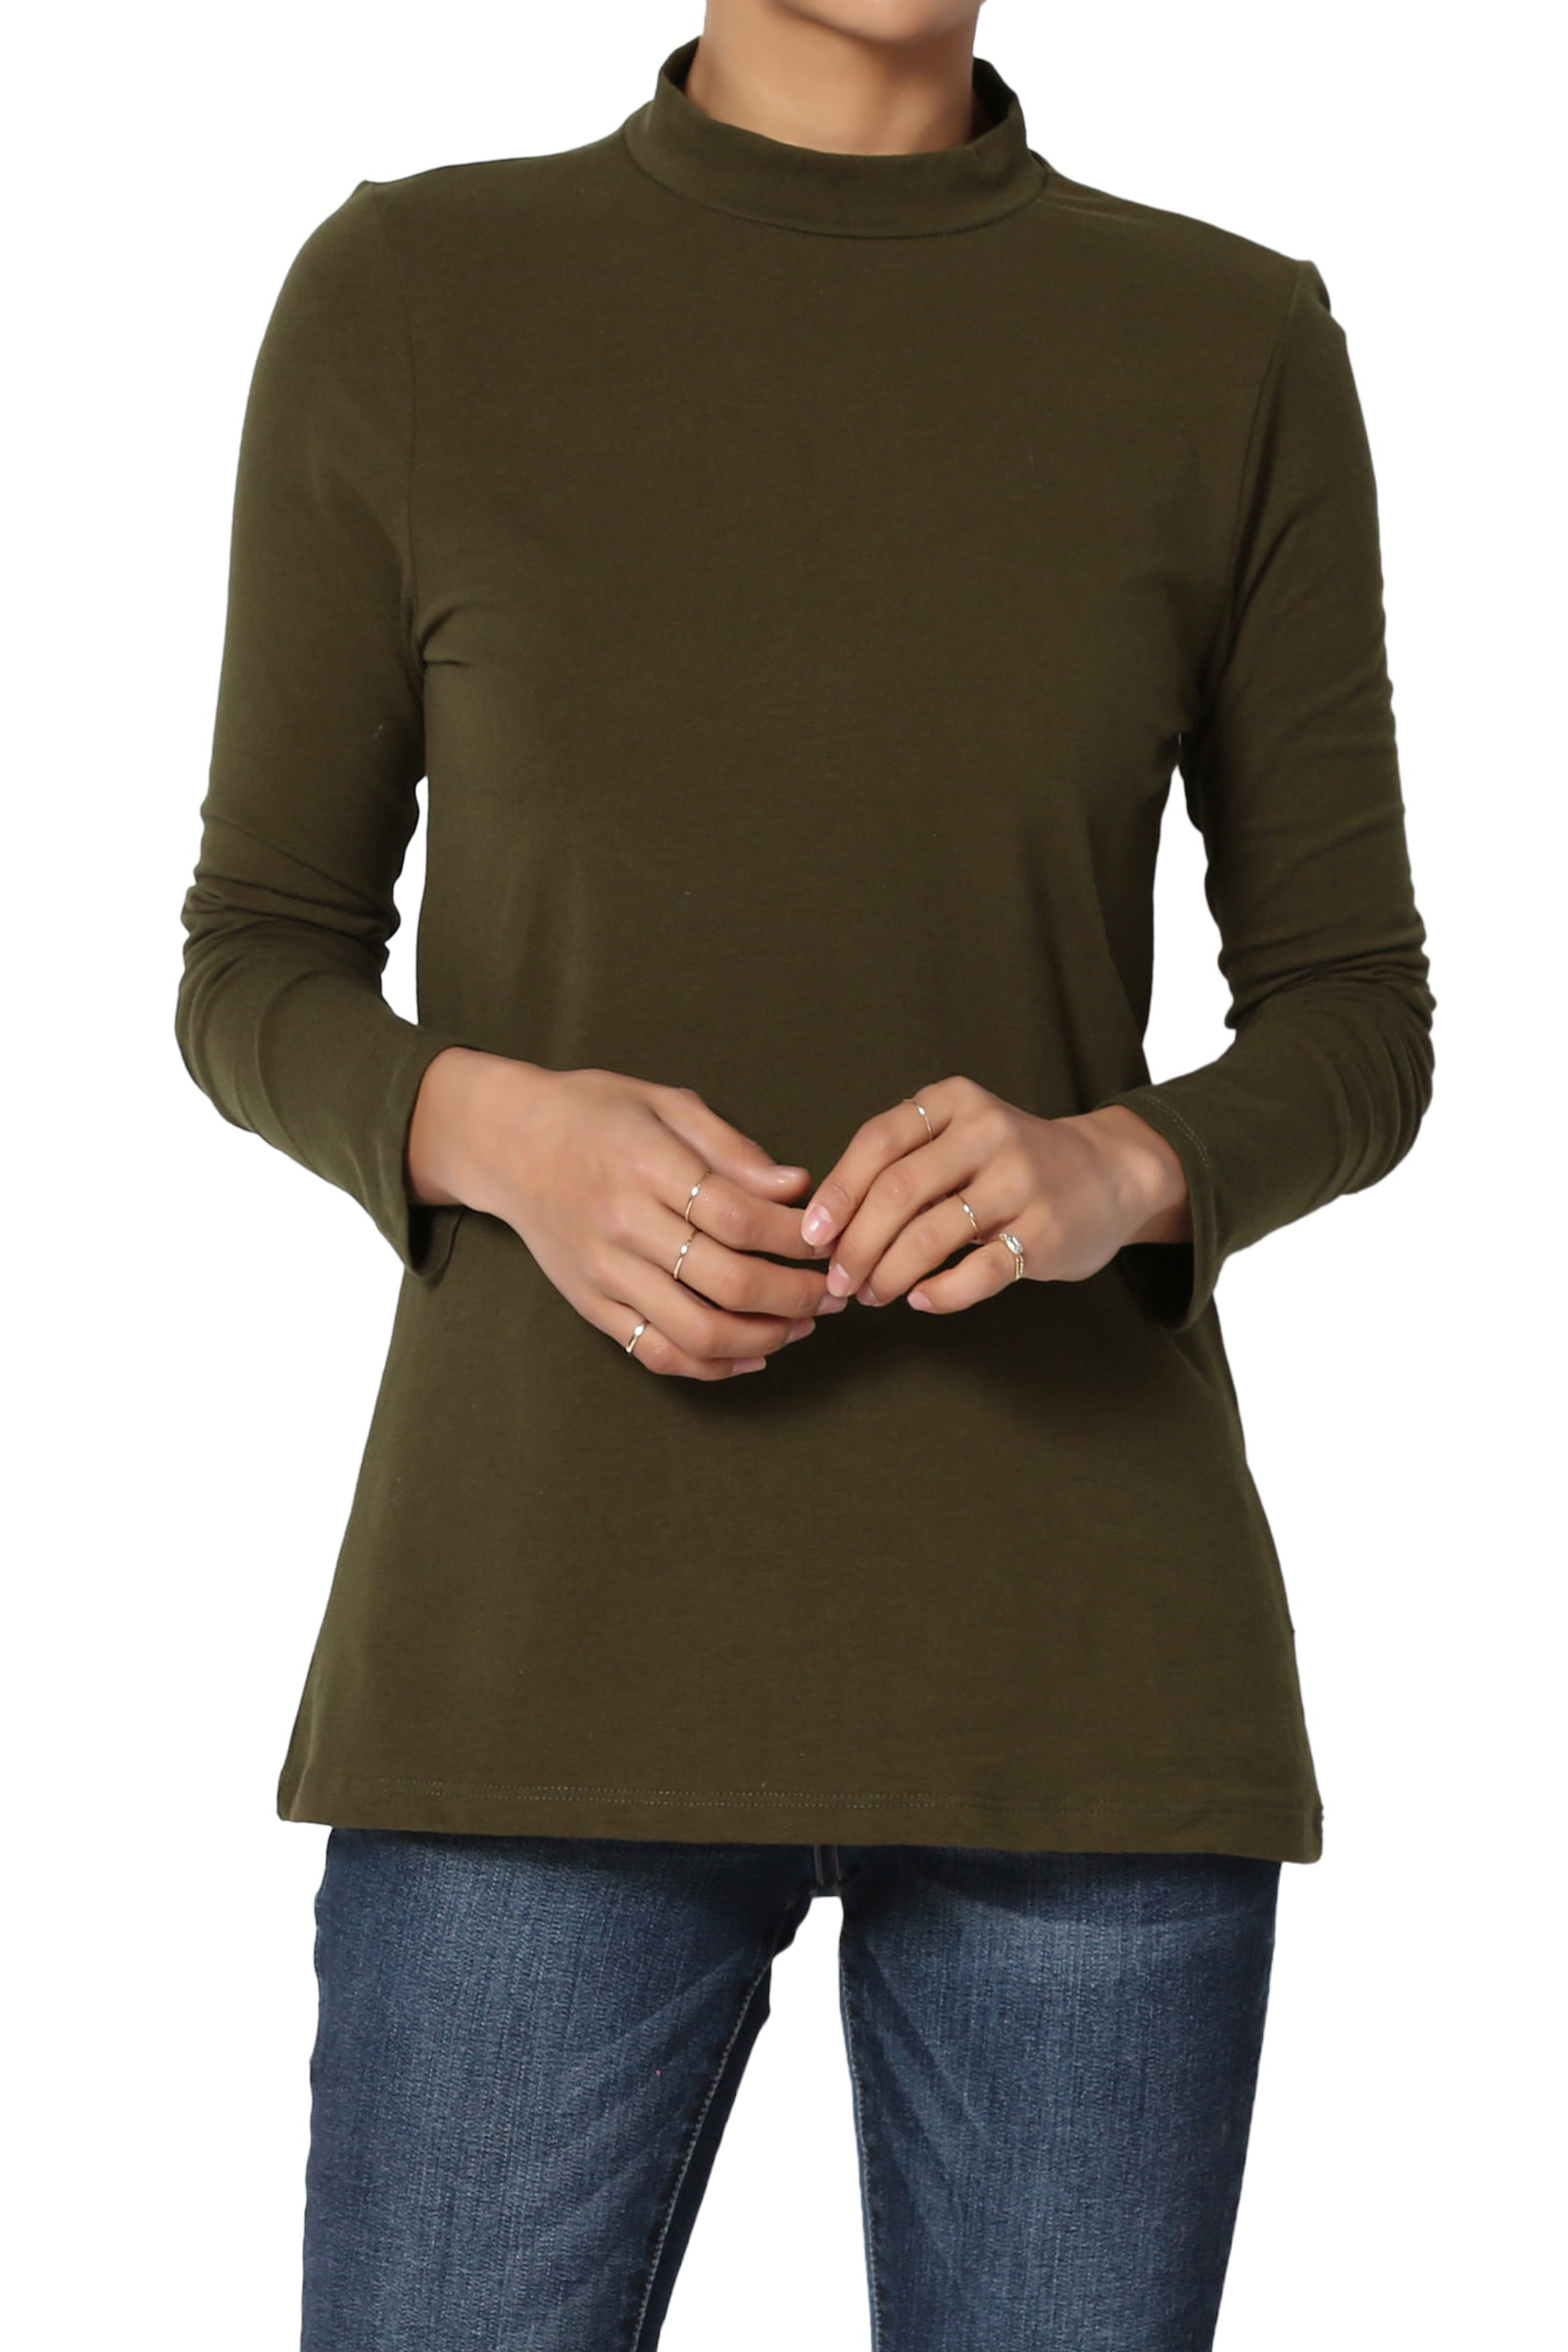 TheMogan Women's S~3XL Mock Neck Long Sleeve T-Shirt Stretch Cotton ...